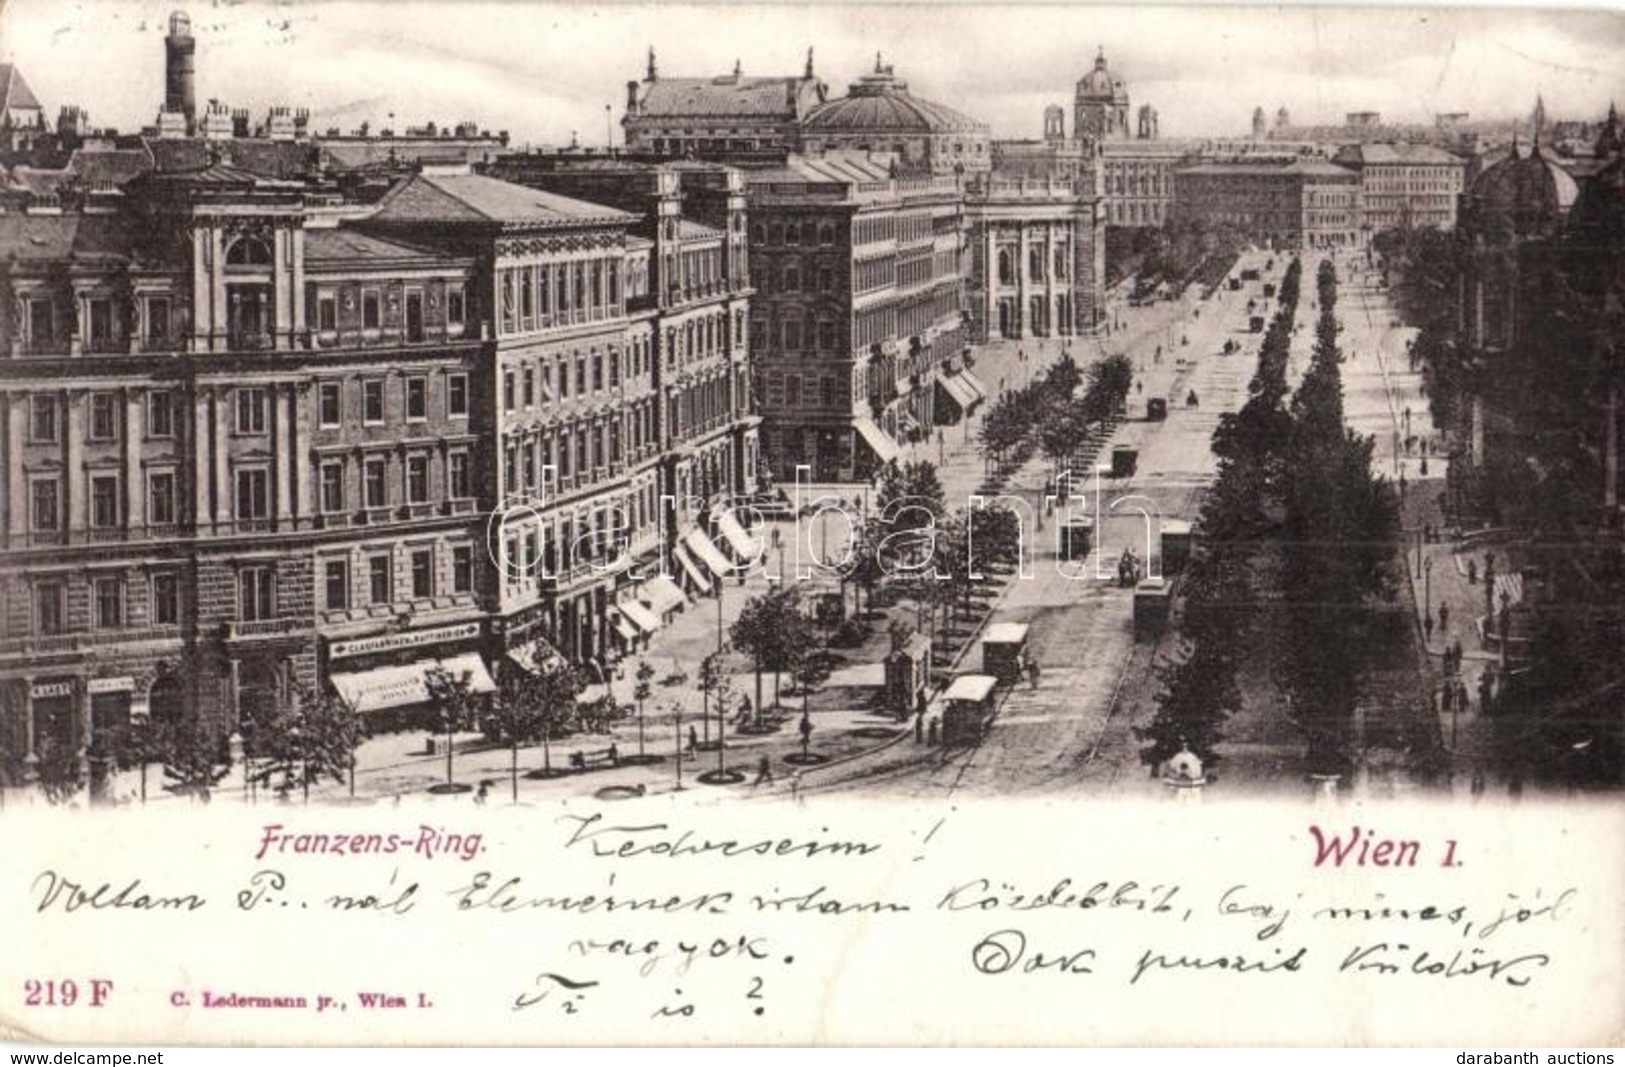 T2/T3 1900 Vienna, Wien I. Franzens-Ring / Street View, Shops, Trams. C. Ledermann Jr. 219 F (EK) - Non Classificati